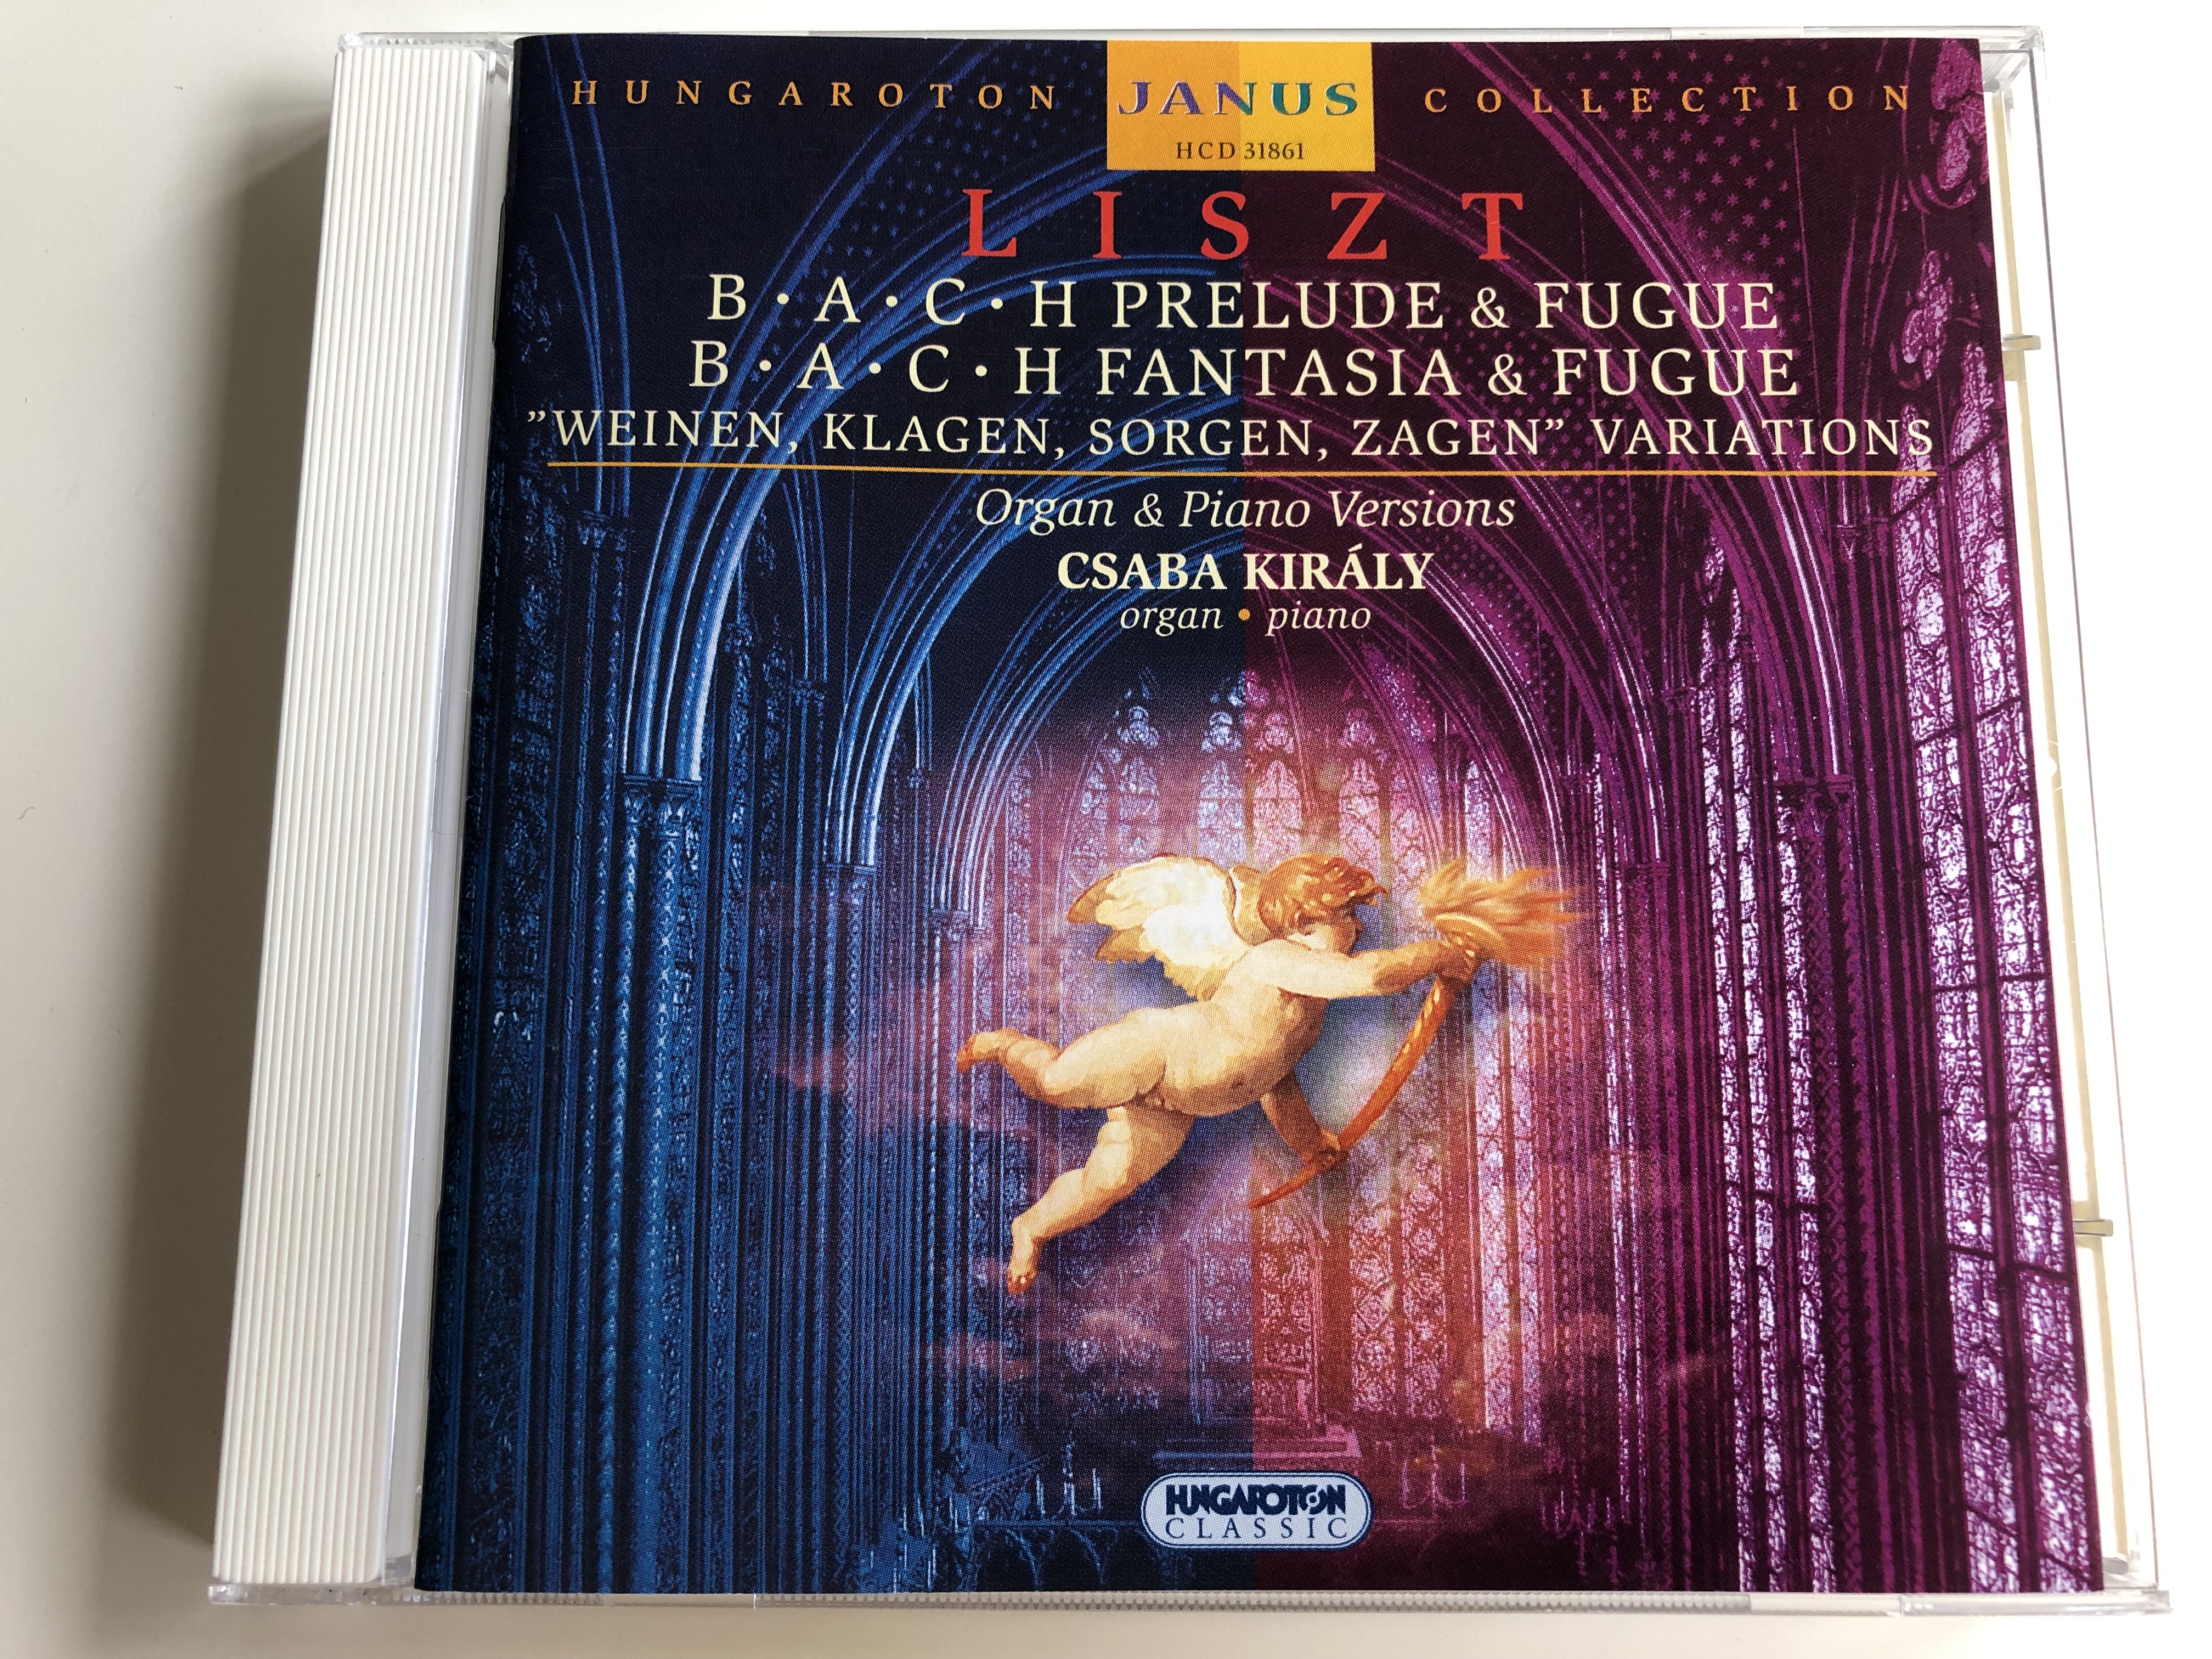 liszt-bach-prelude-fugue-fantasia-fugue-weinen-klagen-sorgen-zagen-variations-organ-piano-versions-csaba-kir-ly-organ-piano-hungaroton-janus-collection-hcd-31861-audio-cd-2001-1-.jpg